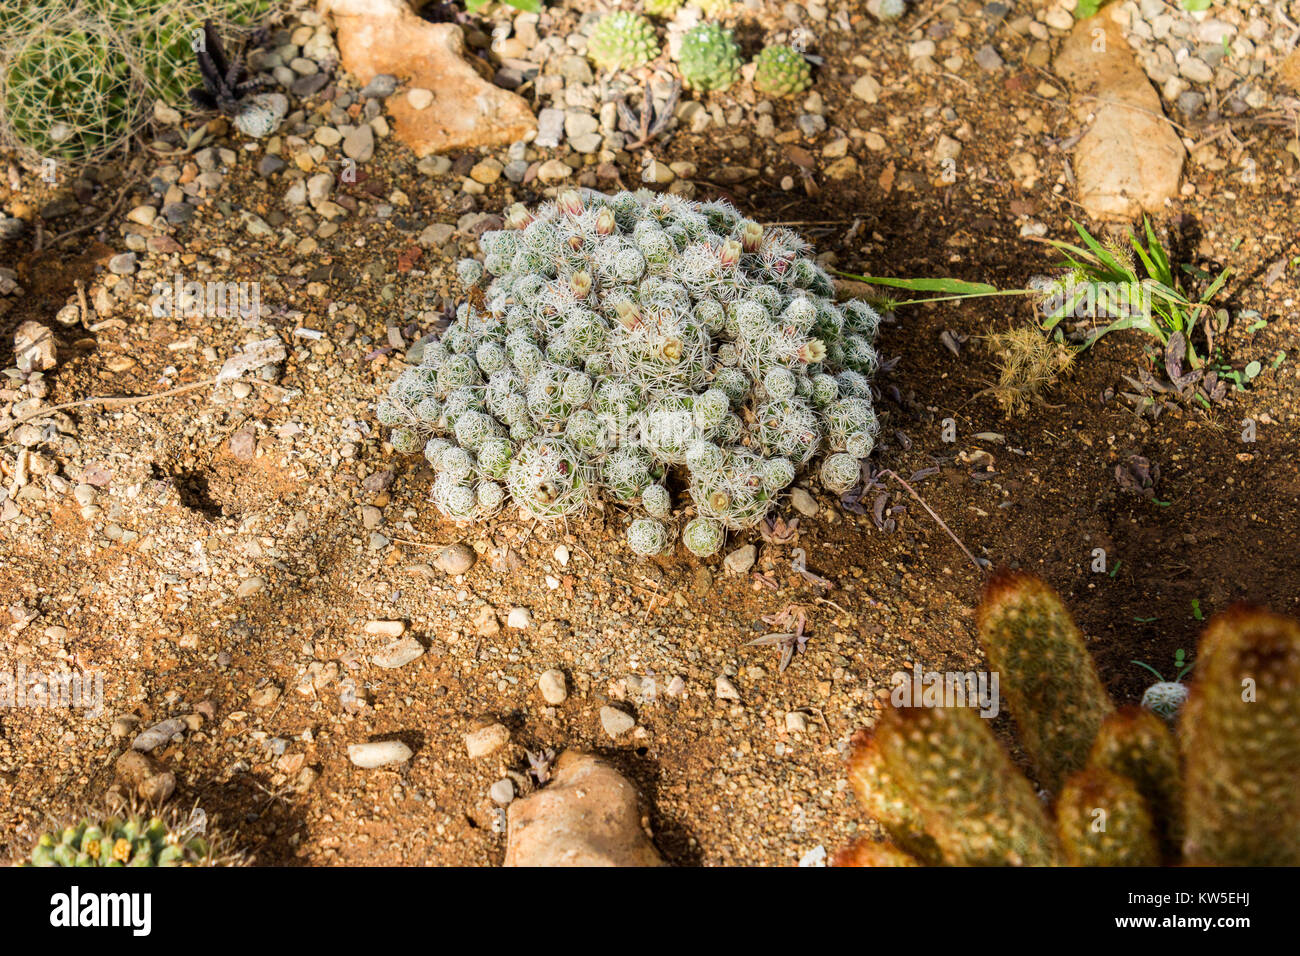 Varie cactus piantato nel terreno, close up shot Foto Stock